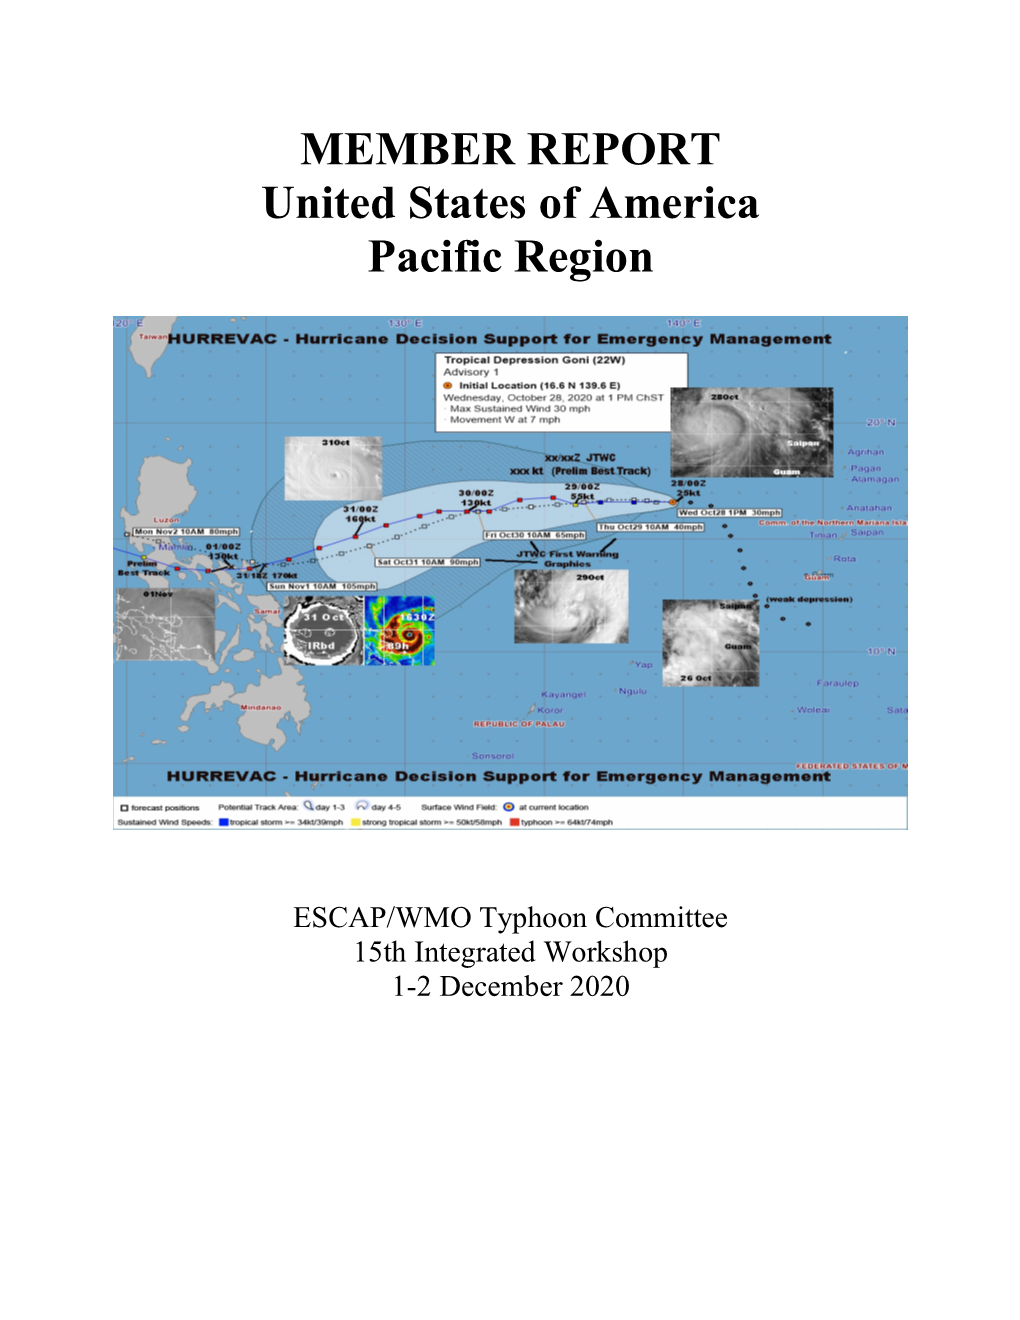 MEMBER REPORT United States of America Pacific Region